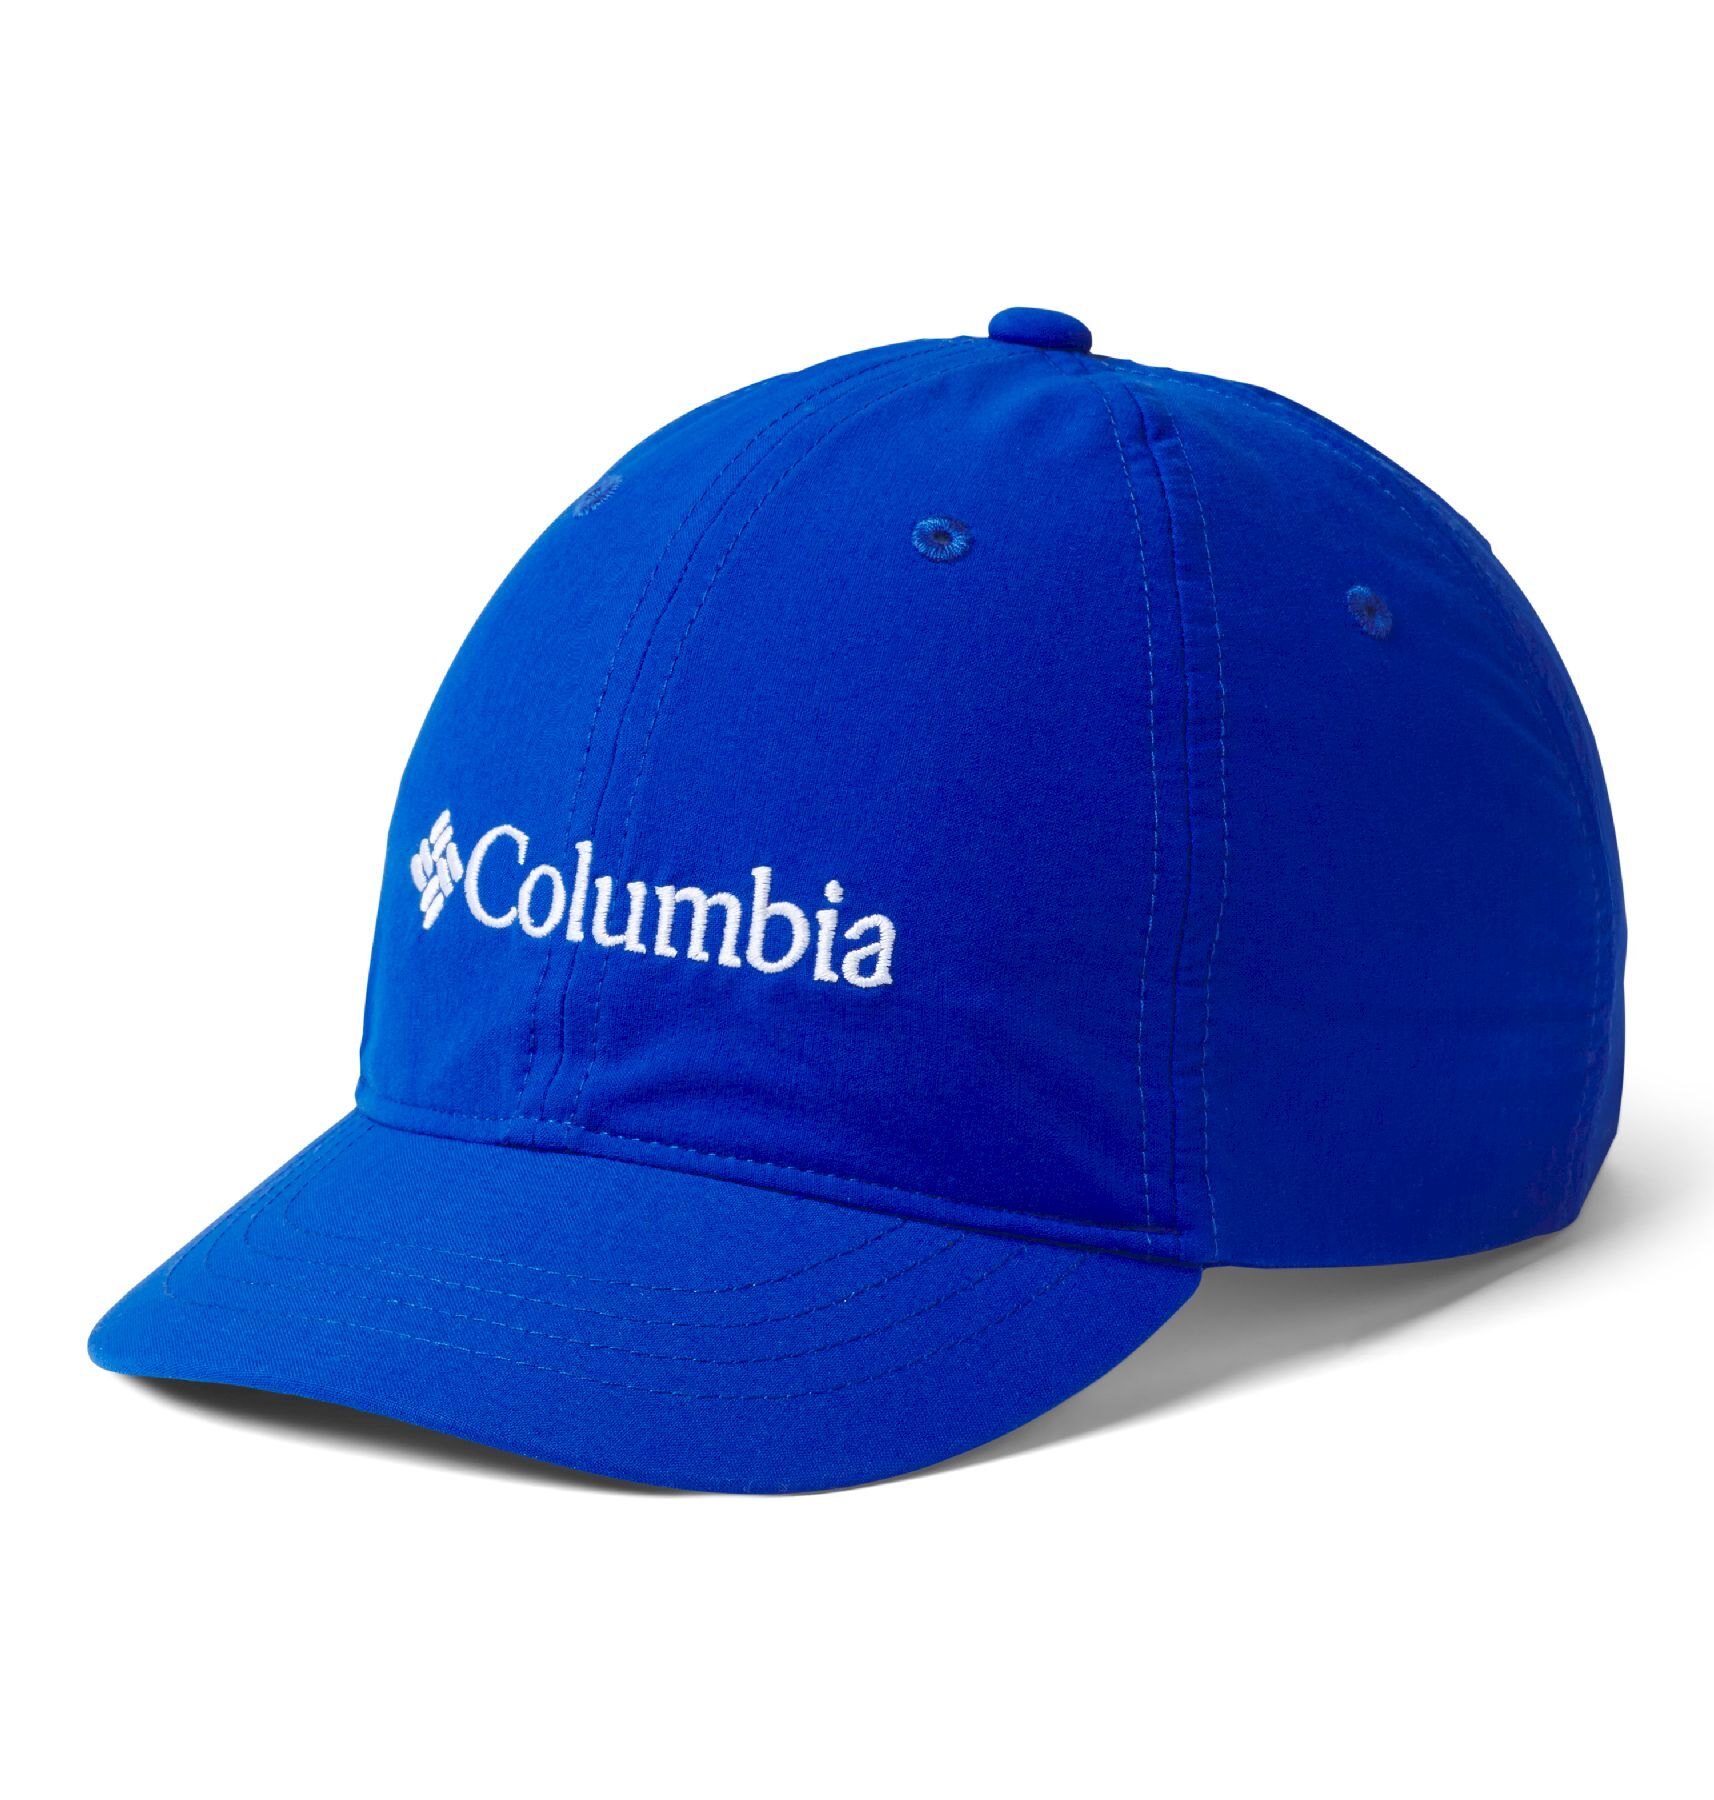 Columbia Youth Adjustable Ball Cap - Lippalakki